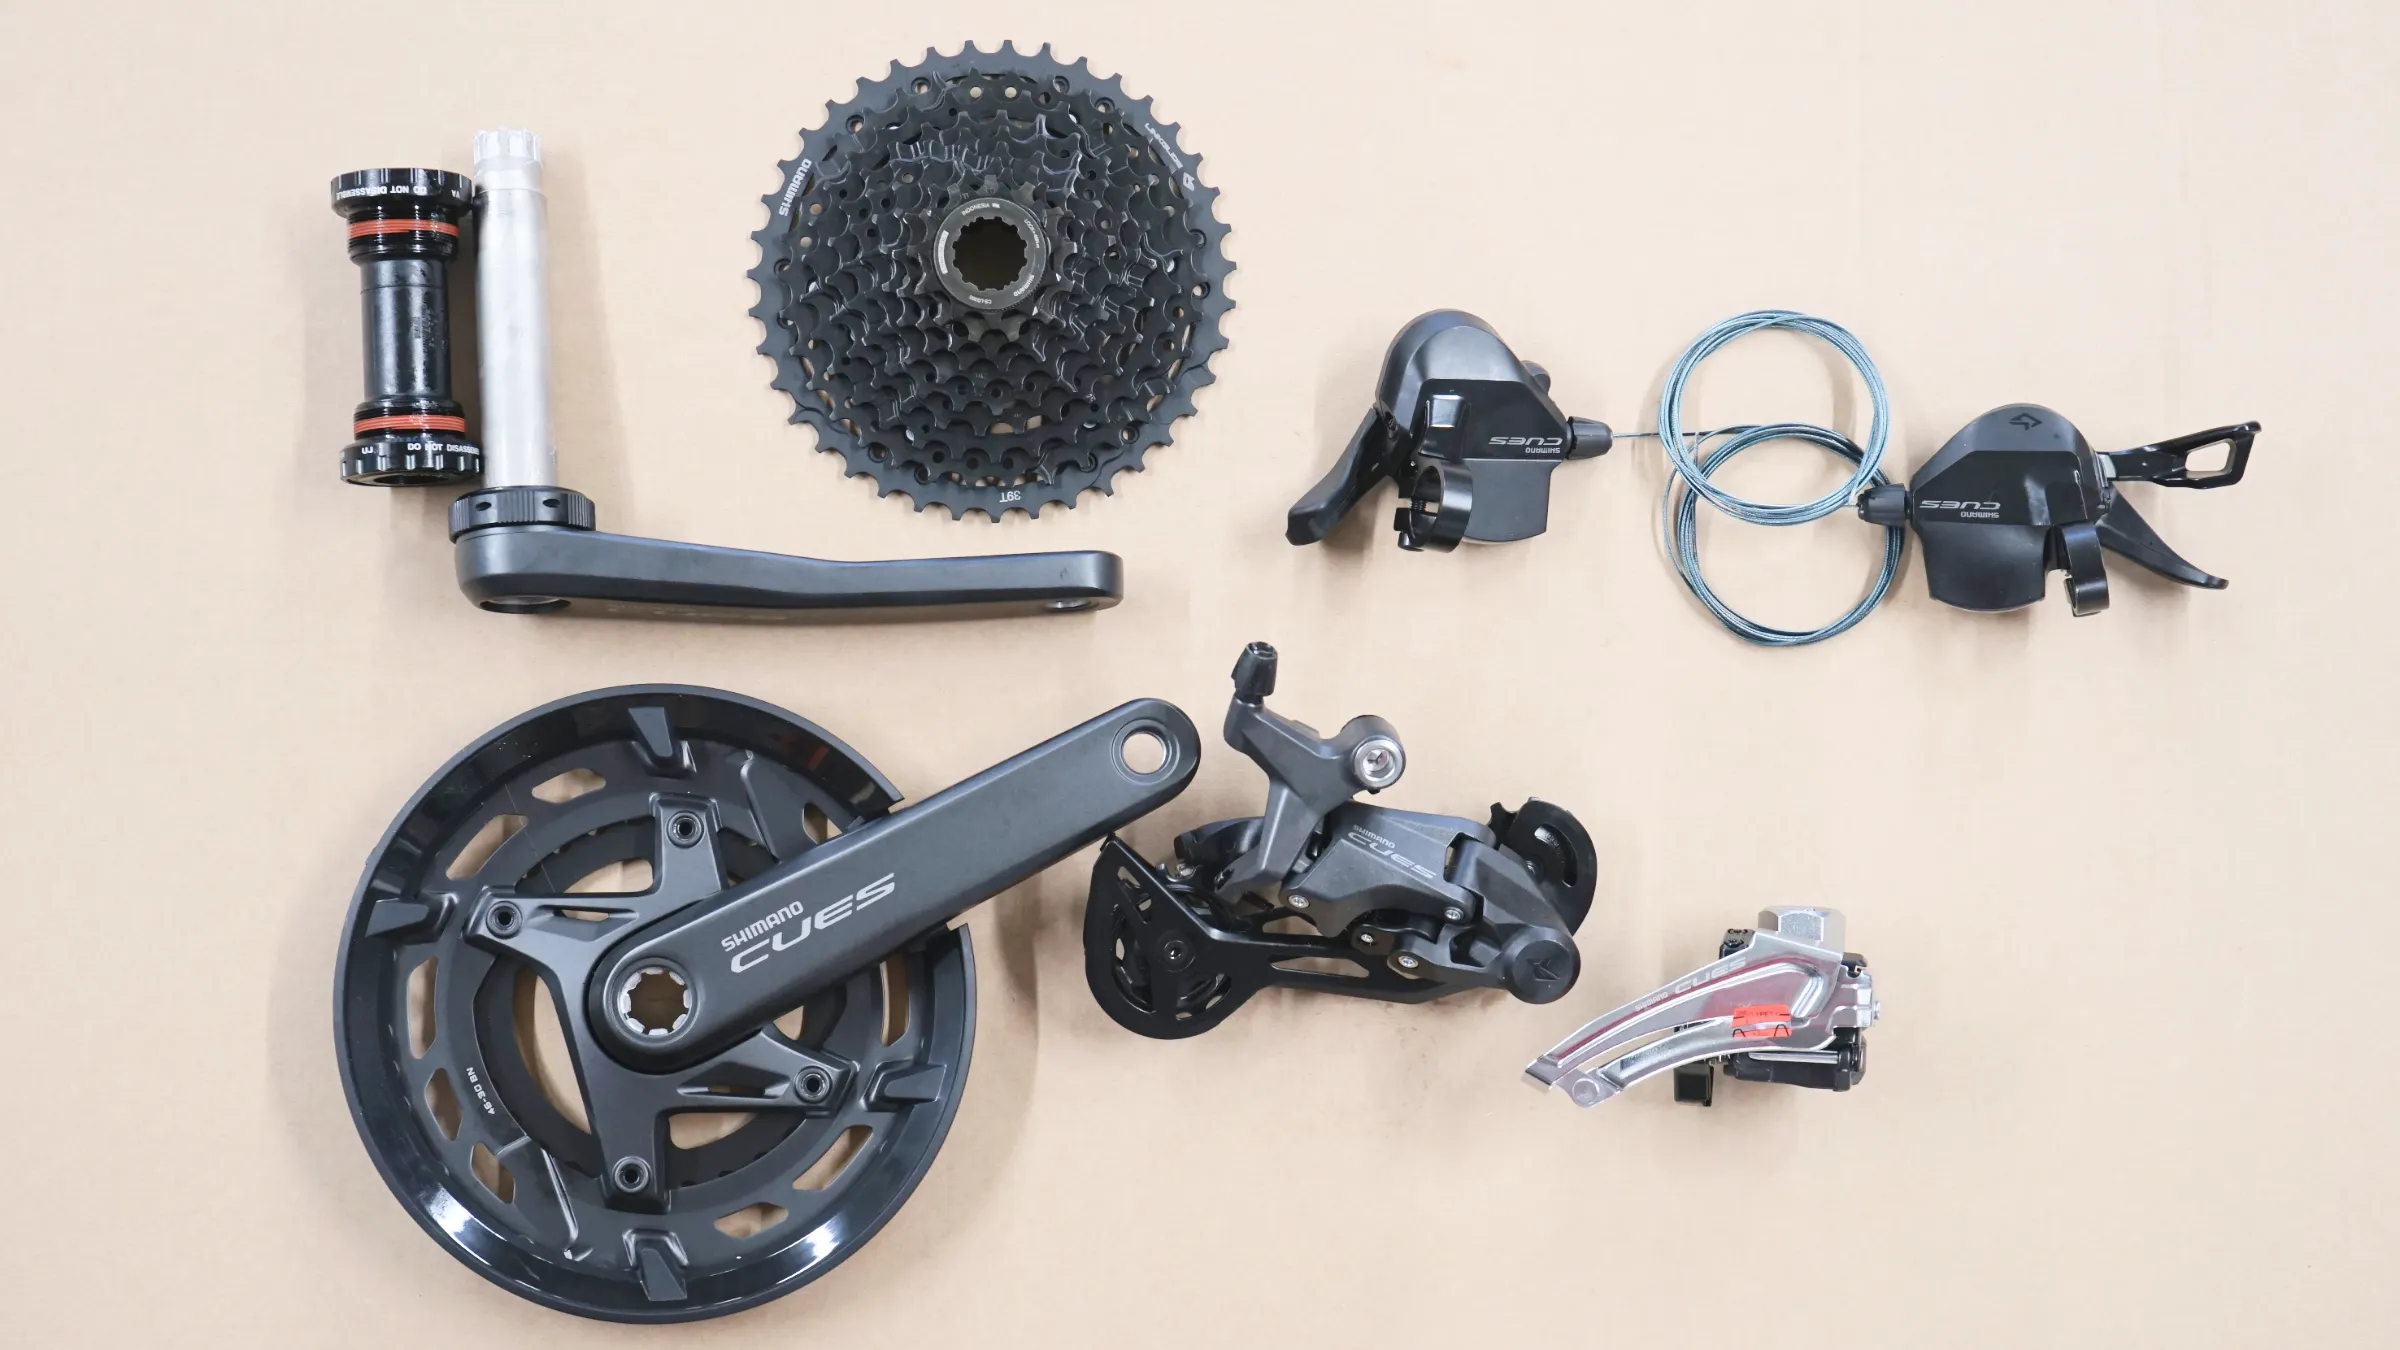 Shimano Cues 2x11 groupset used on AZUB recumbent trikes and recumbent bicycles